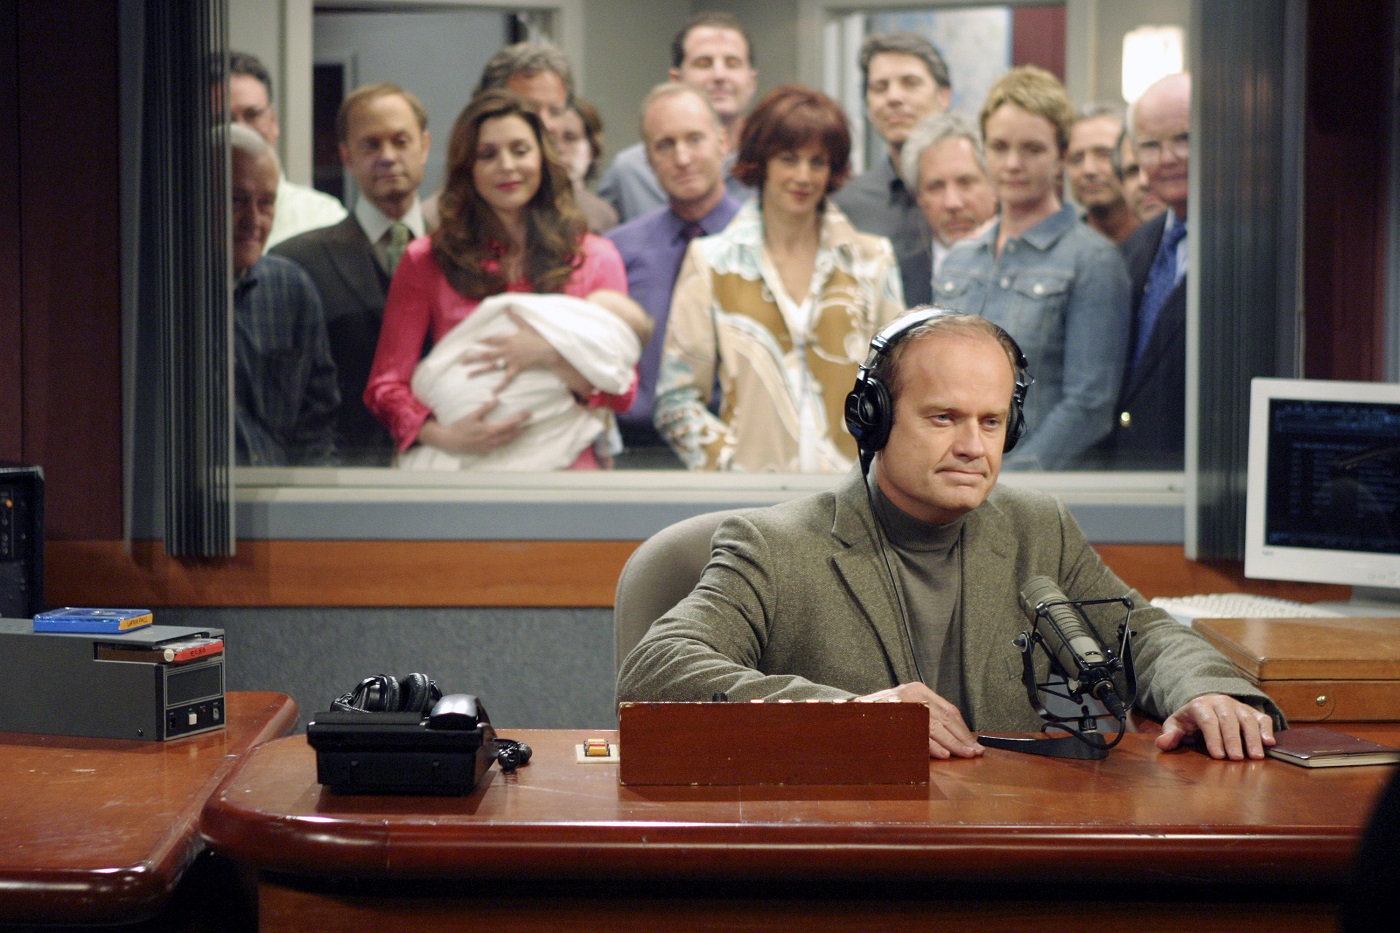 Kelsey Grammer as Dr. Frasier Crane appears in the finale episode of 'Frasier' at his desk at the news station.